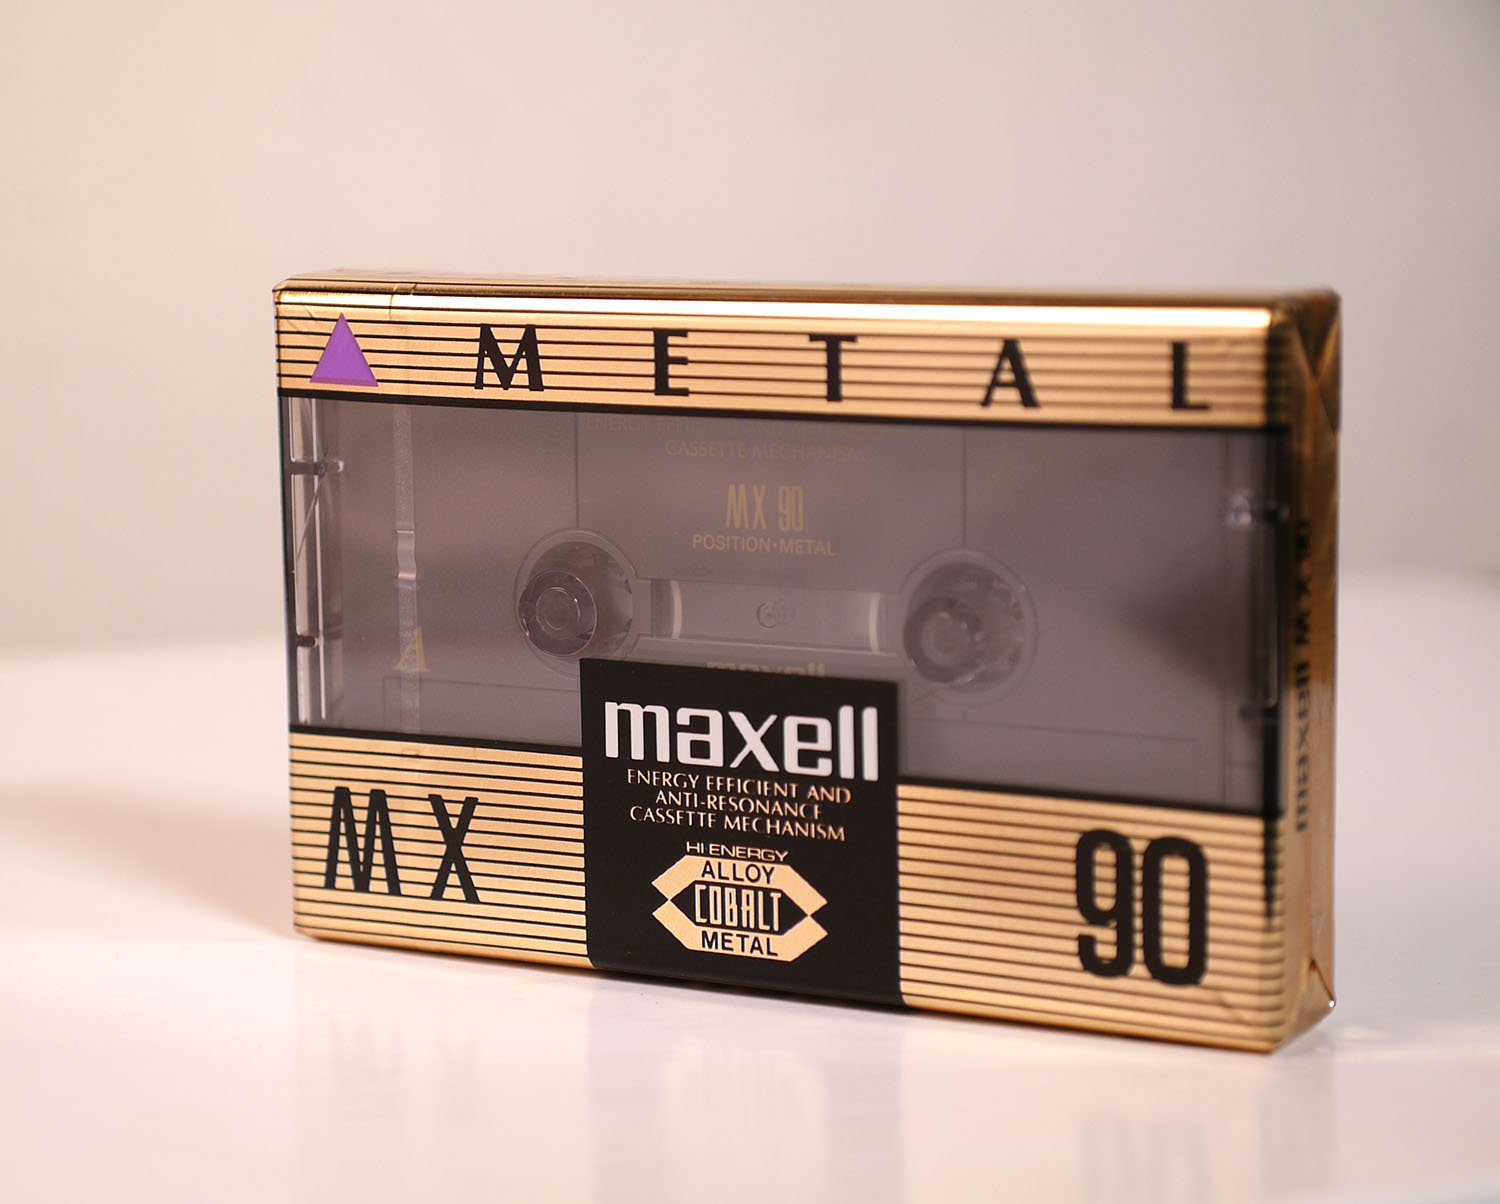 Maxell mx 90 01